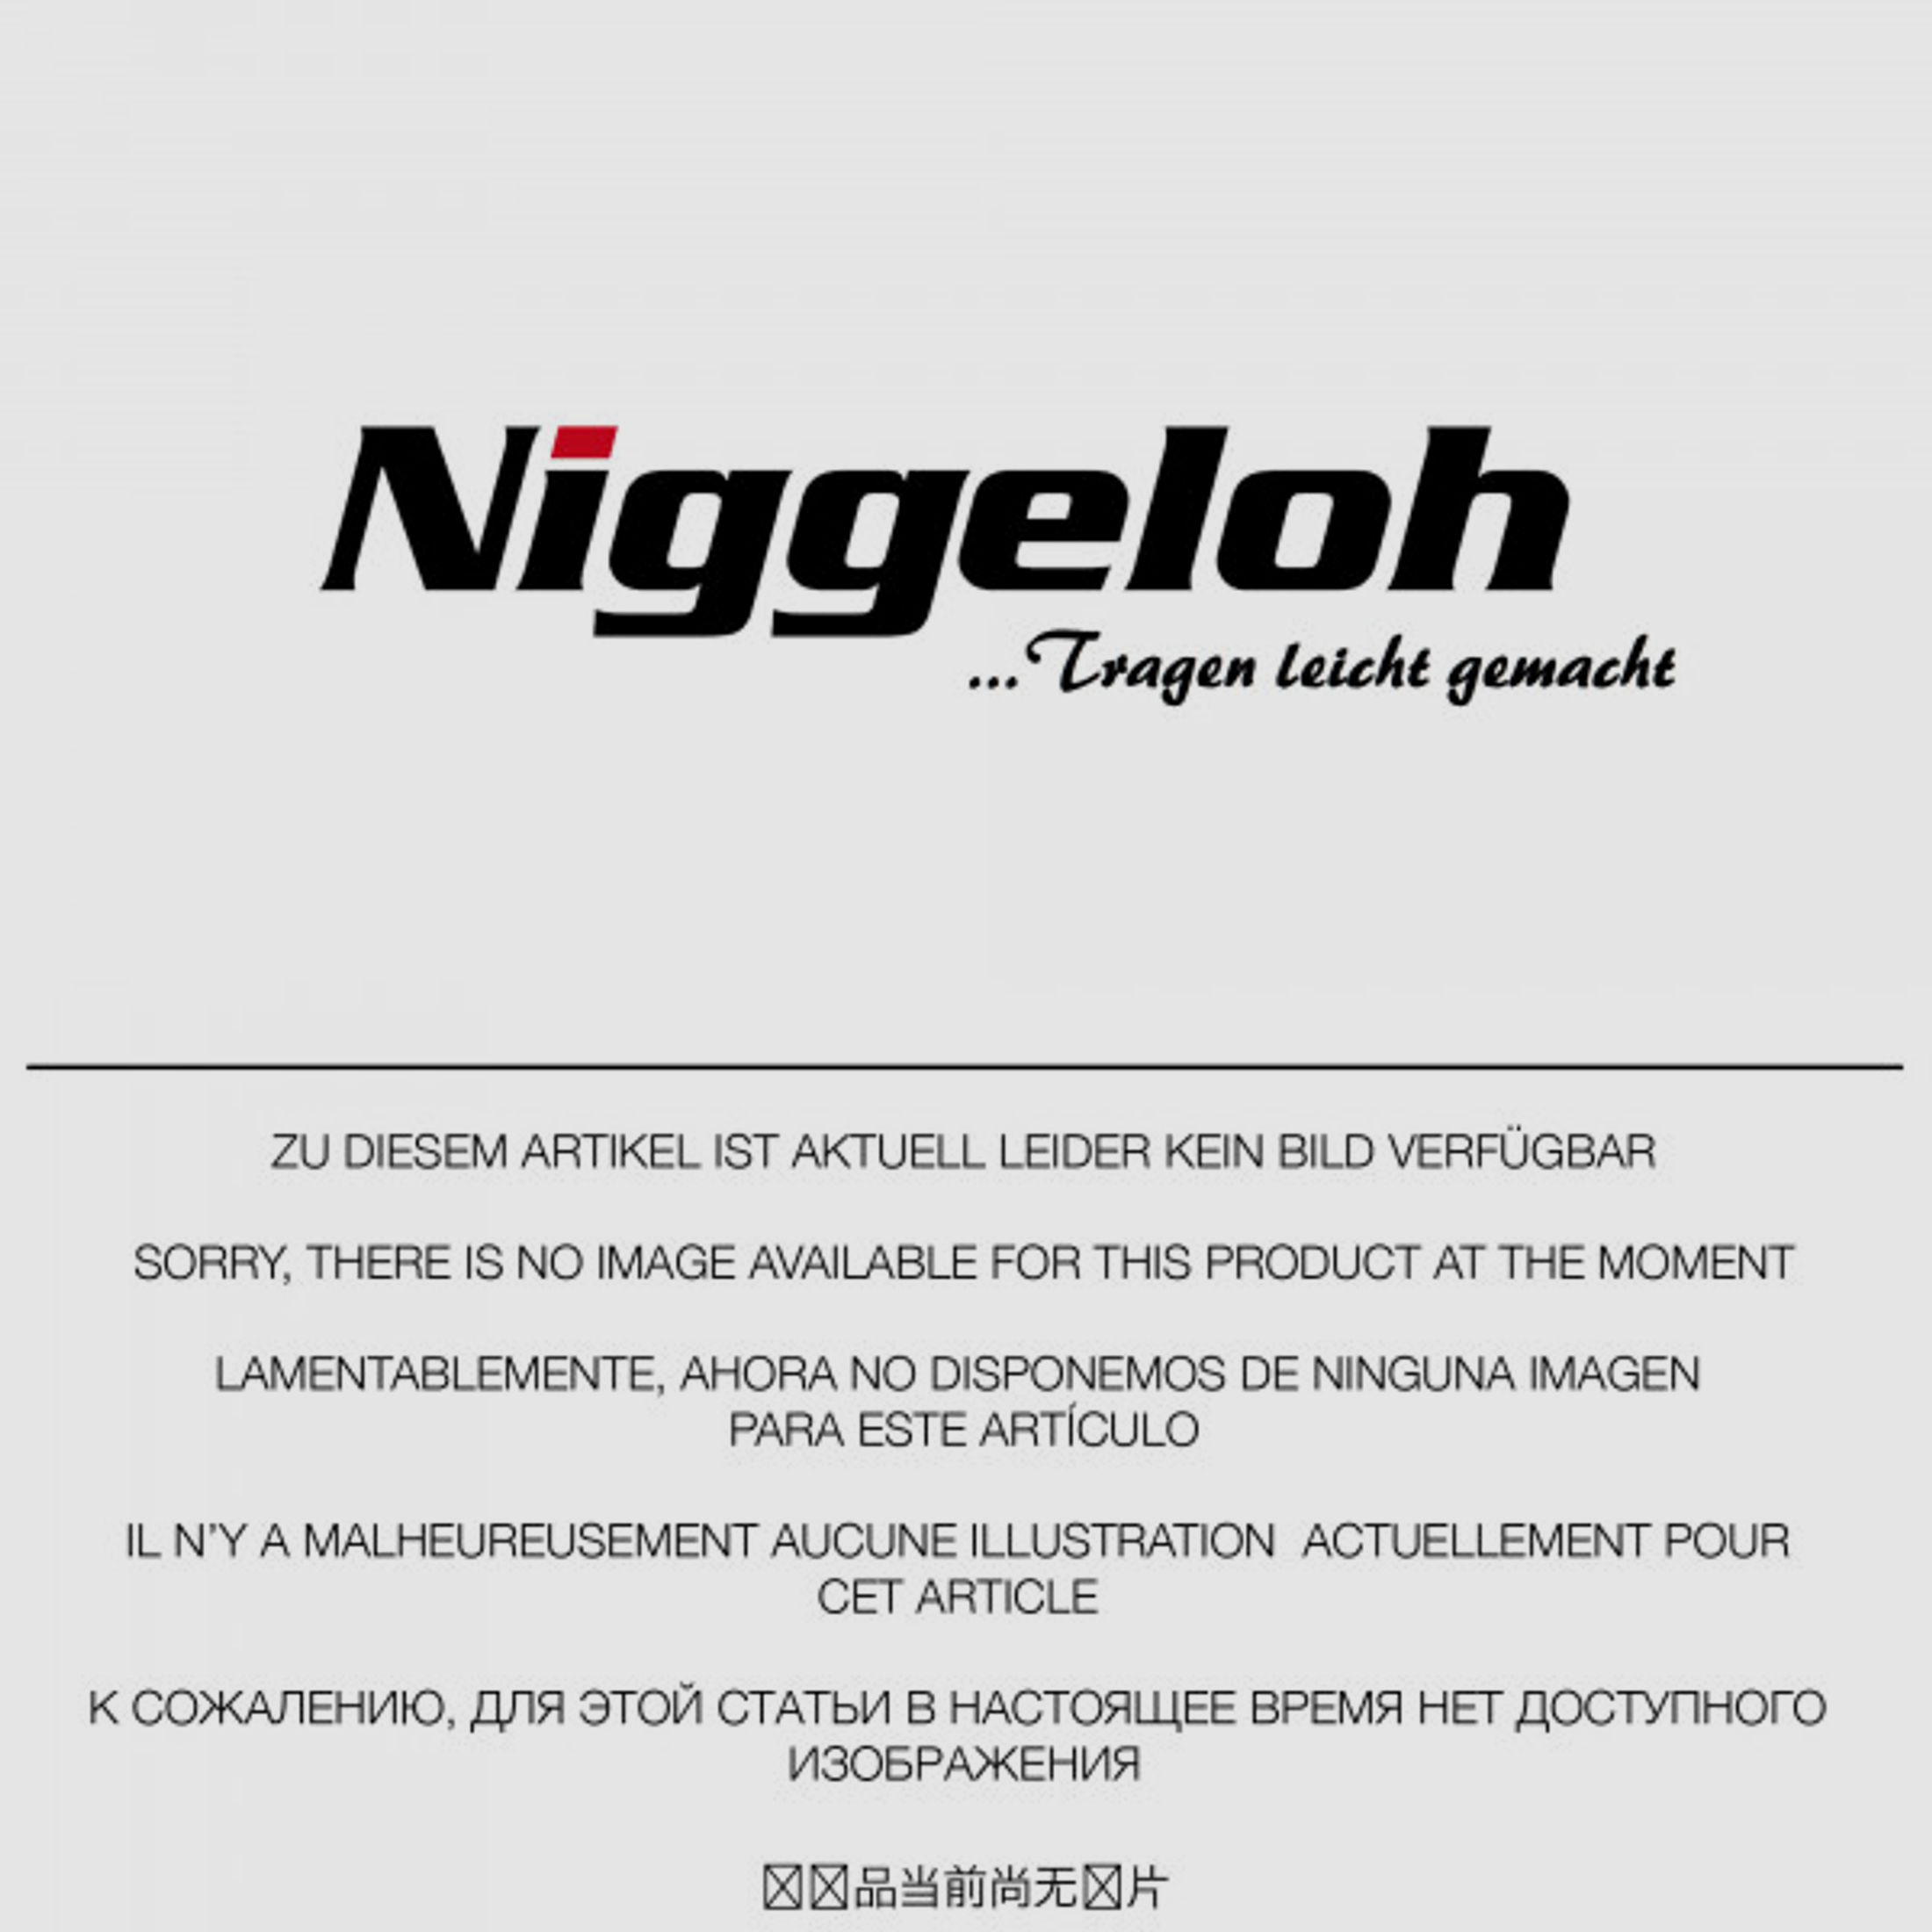 Niggeloh Gewehrgurt Action #406600034